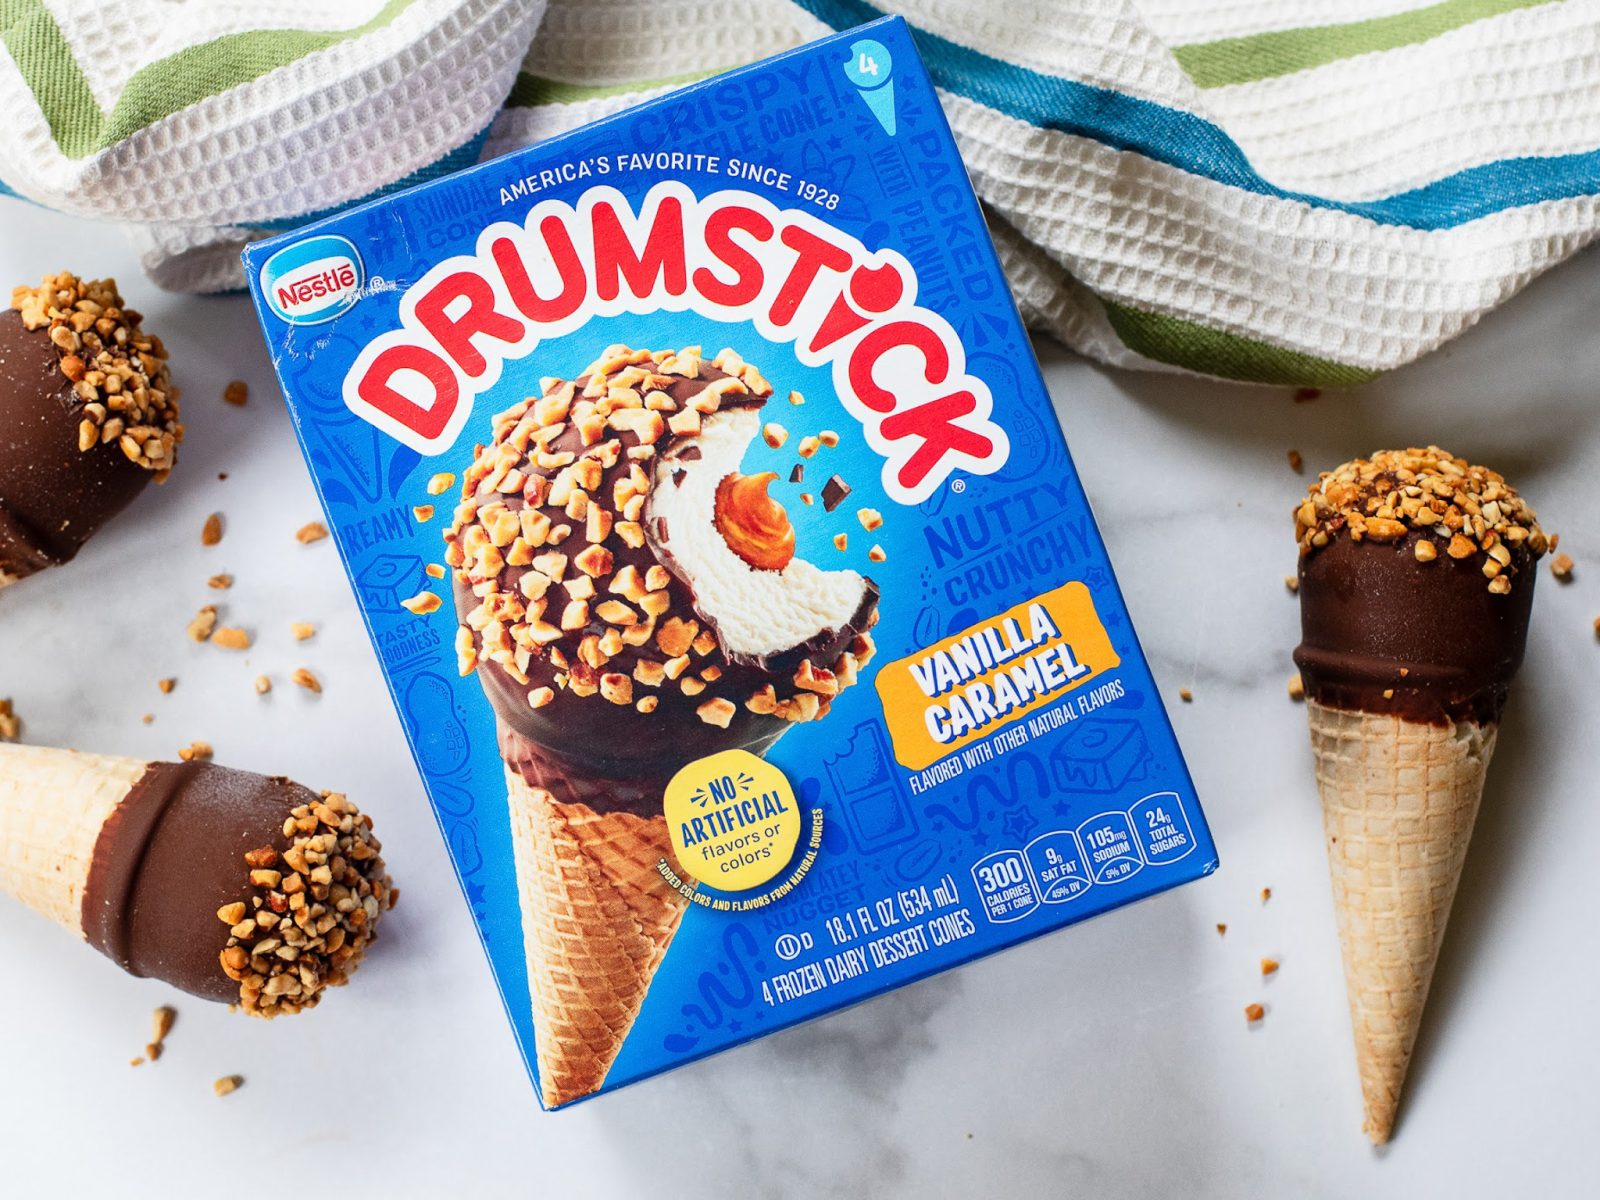 Pick Up Nestle Drumstick Cones 8-Count Boxes For Just $2.49 At Kroger (Regular Price $9.49)